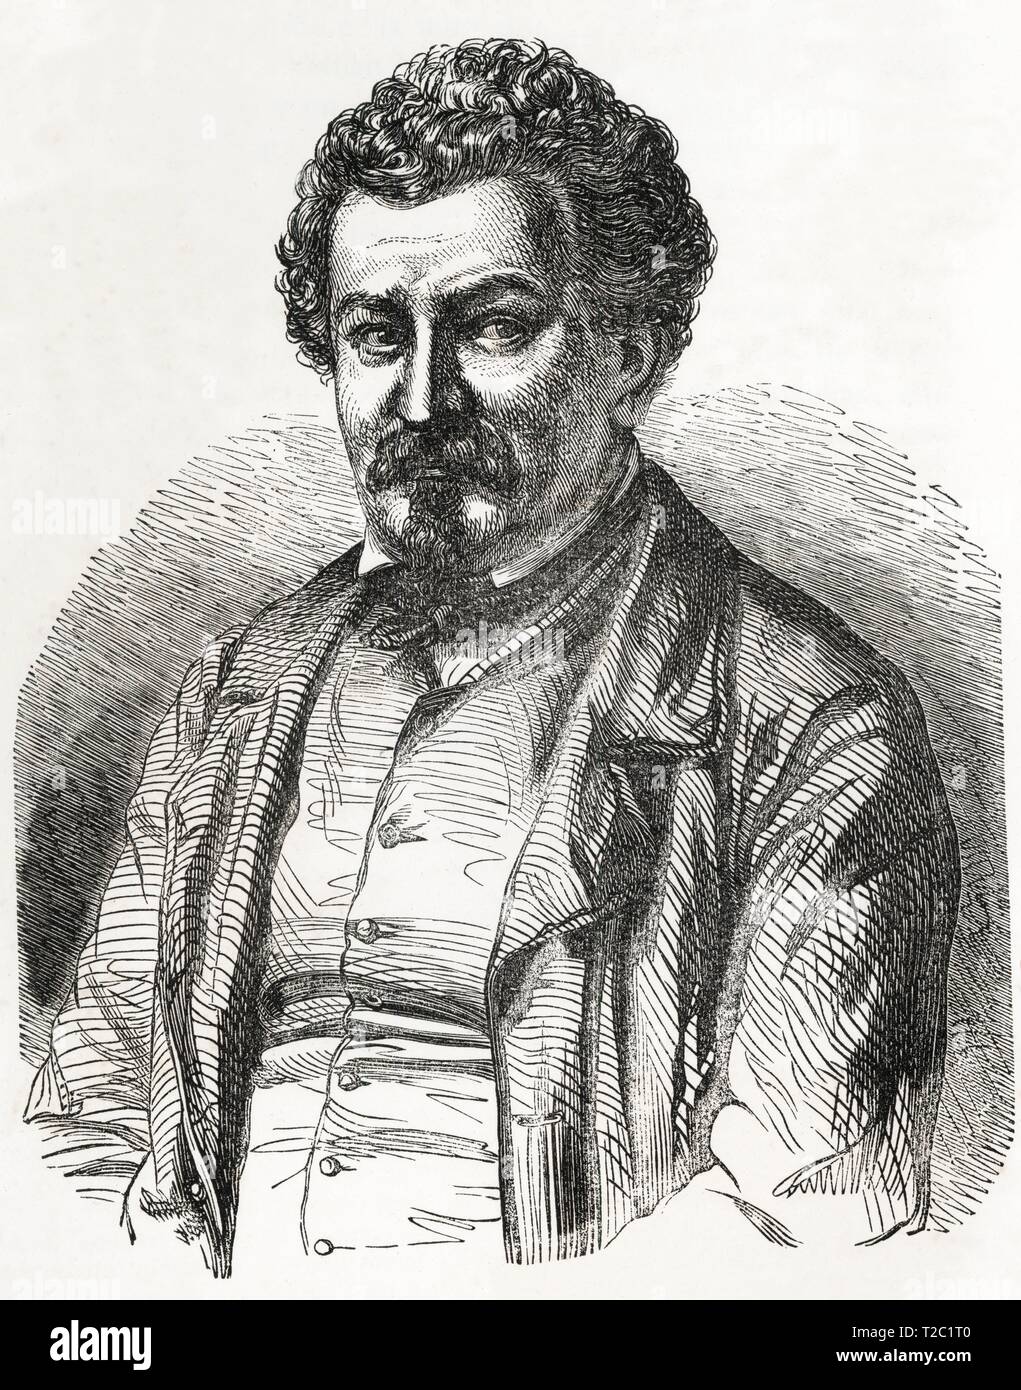 Tony Johannot (1803-1852), grabador, ilustrador y pintor francés. Stock Photo